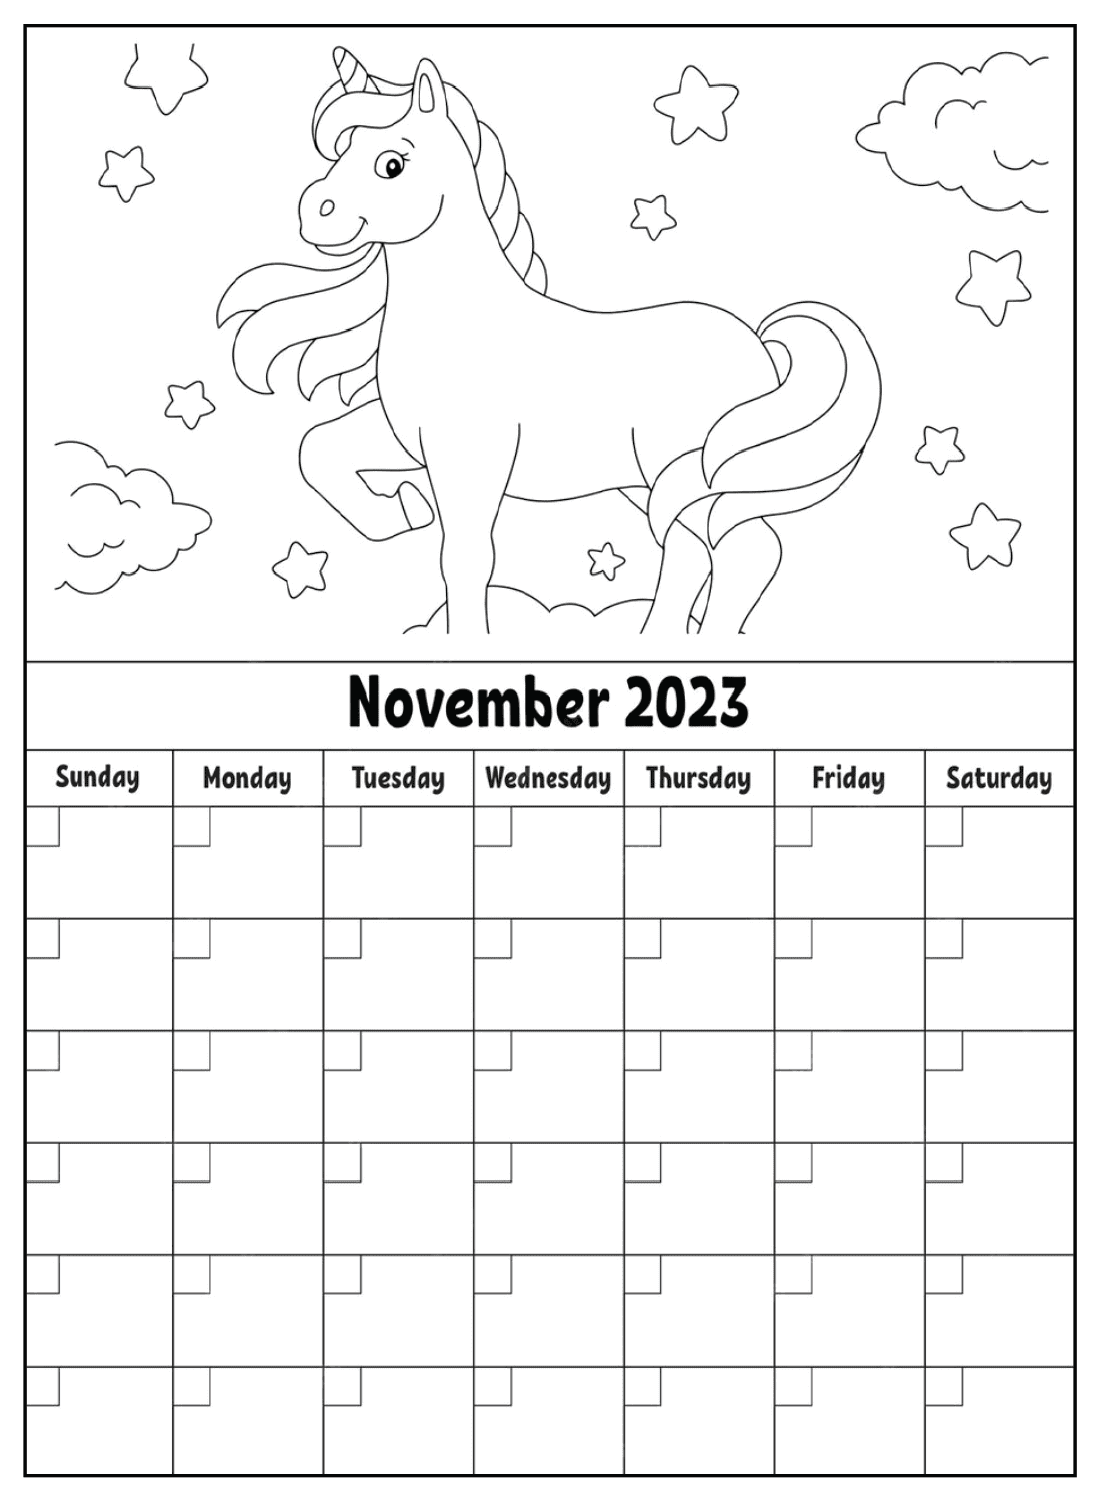 November Calendar Coloring Page